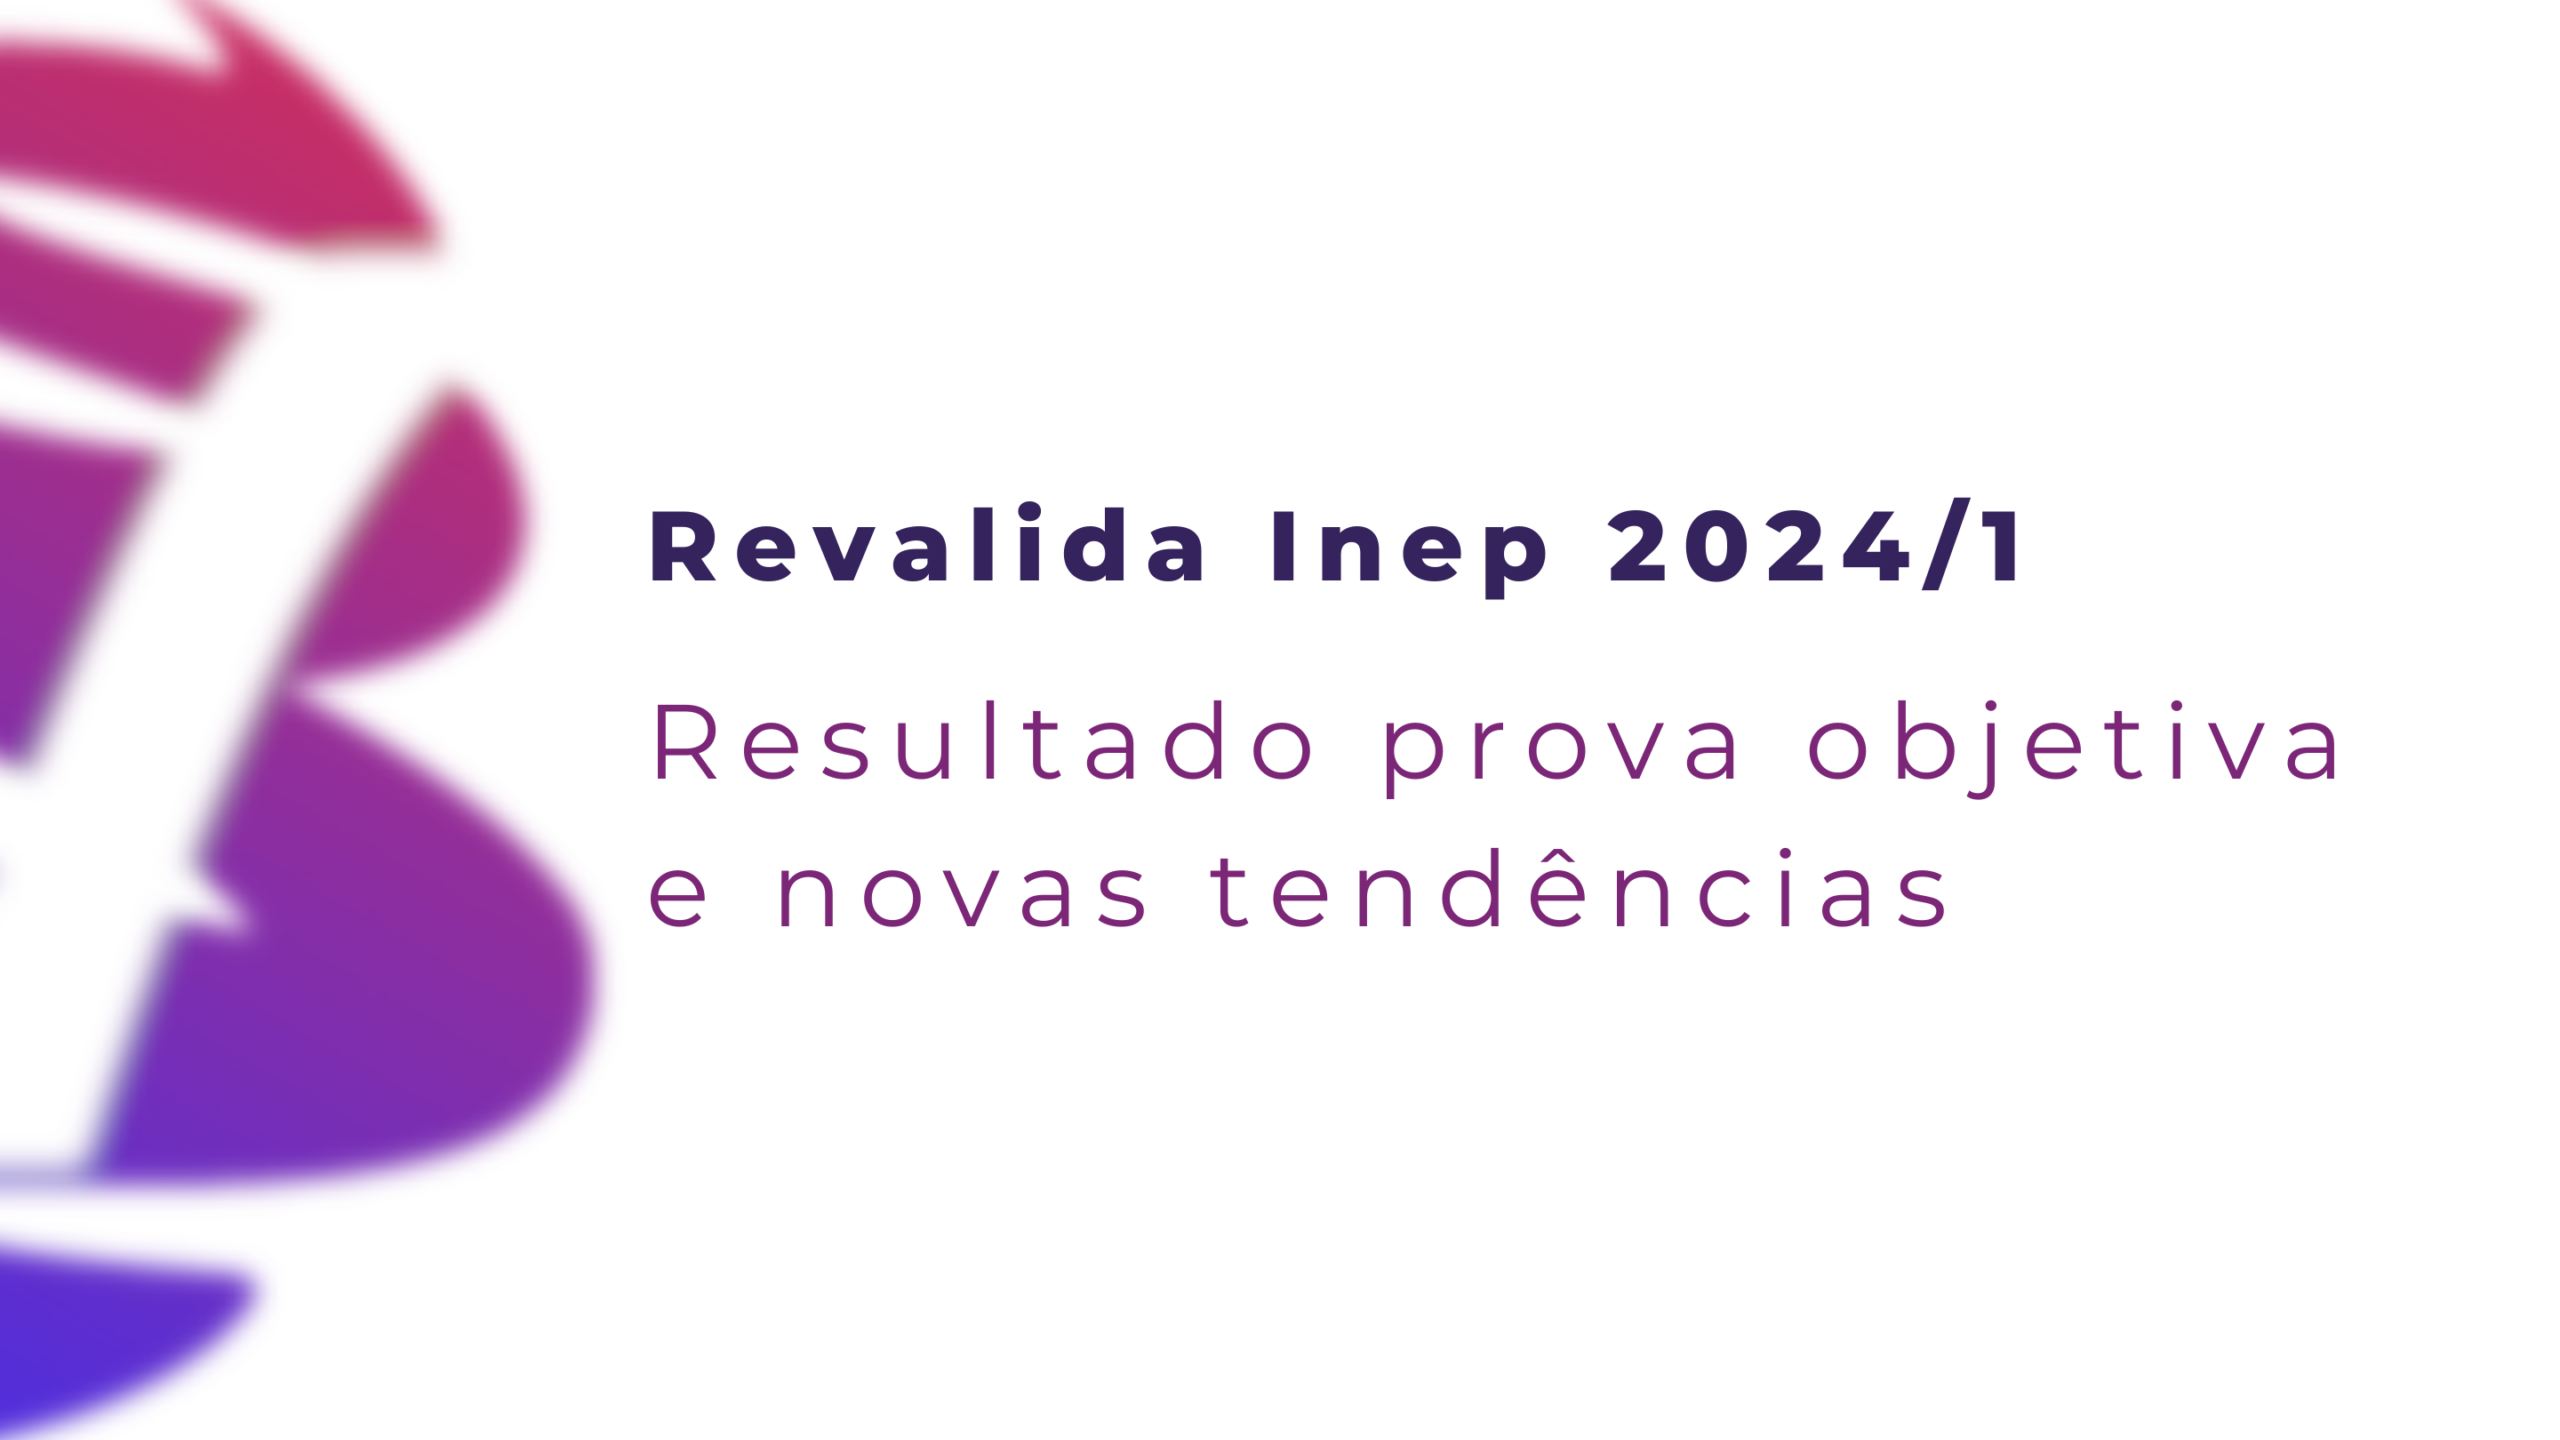 Revalida inep 2024/1 - Resultado da prova objetiva e novas tendências